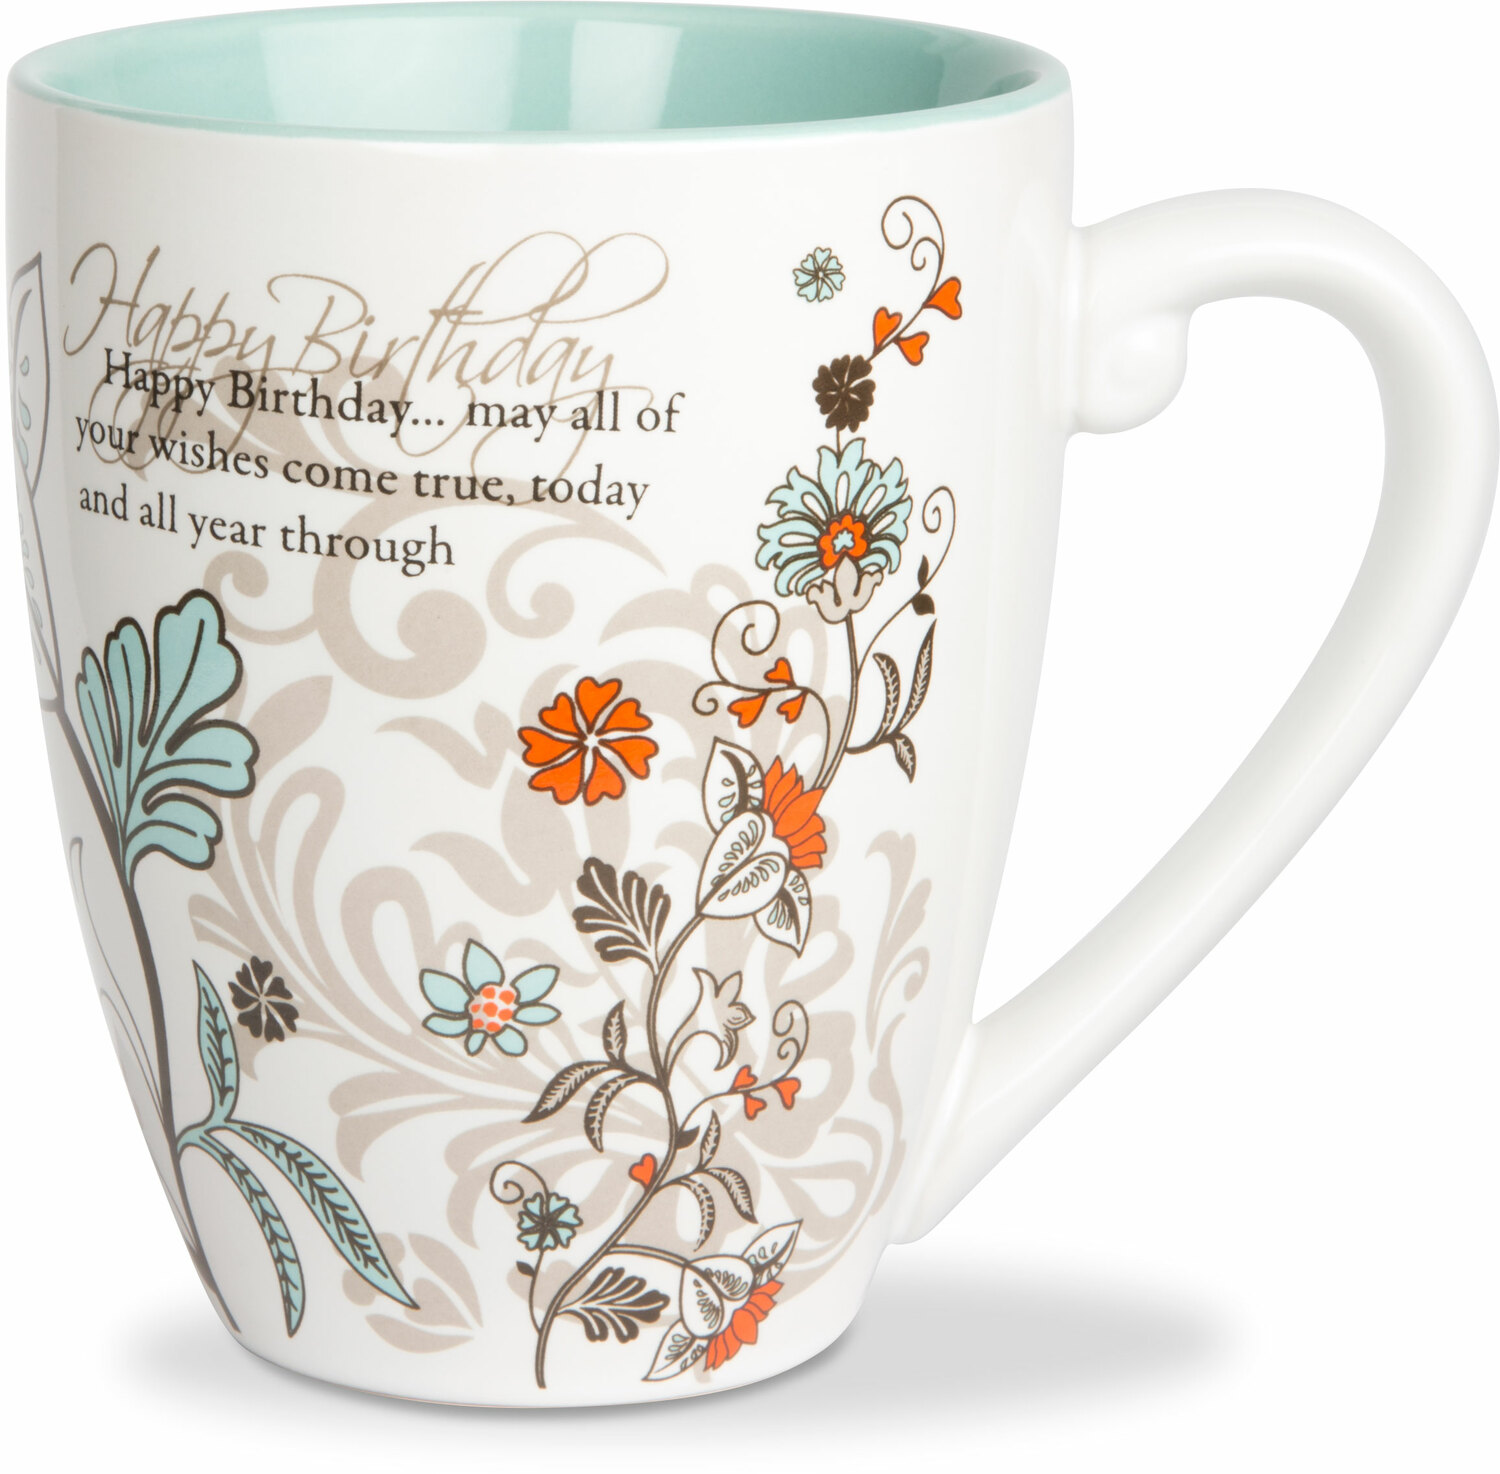 Happy Birthday by Mark My Words - Large Flower Print Birthday Coffee Mug, 20 oz